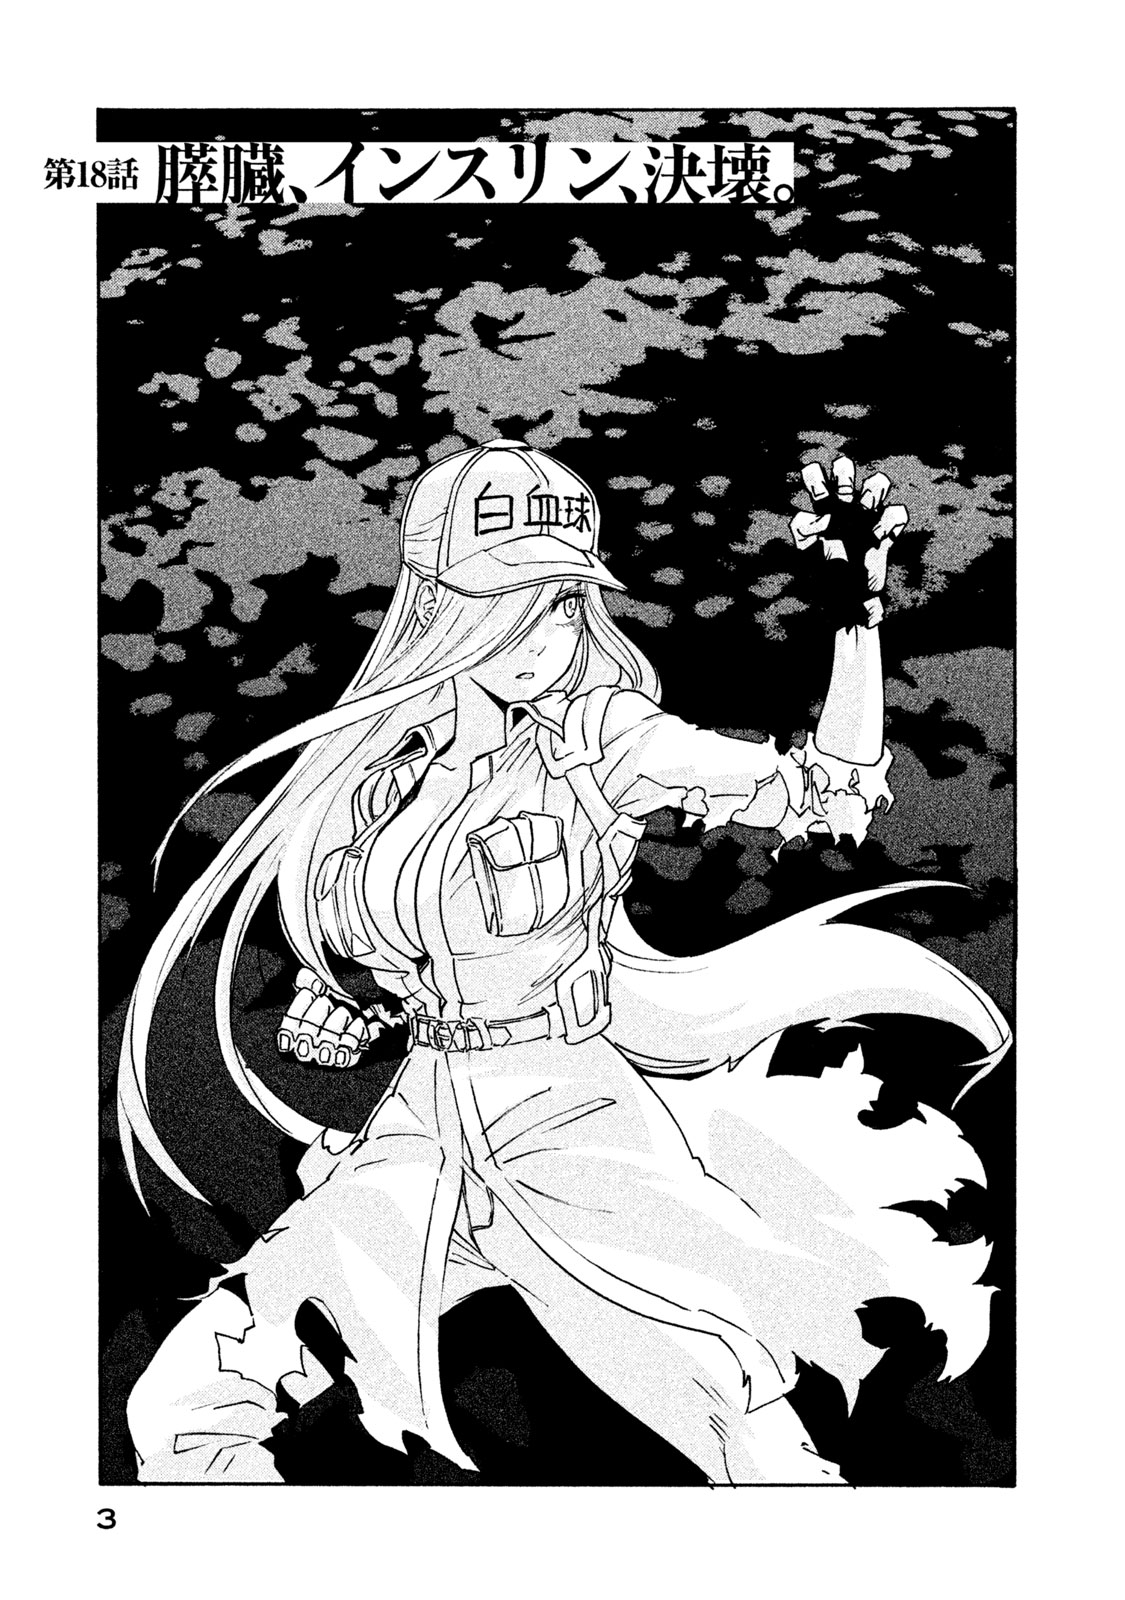 Hataraku Saibou BLACK - Chapter 18 - Page 5